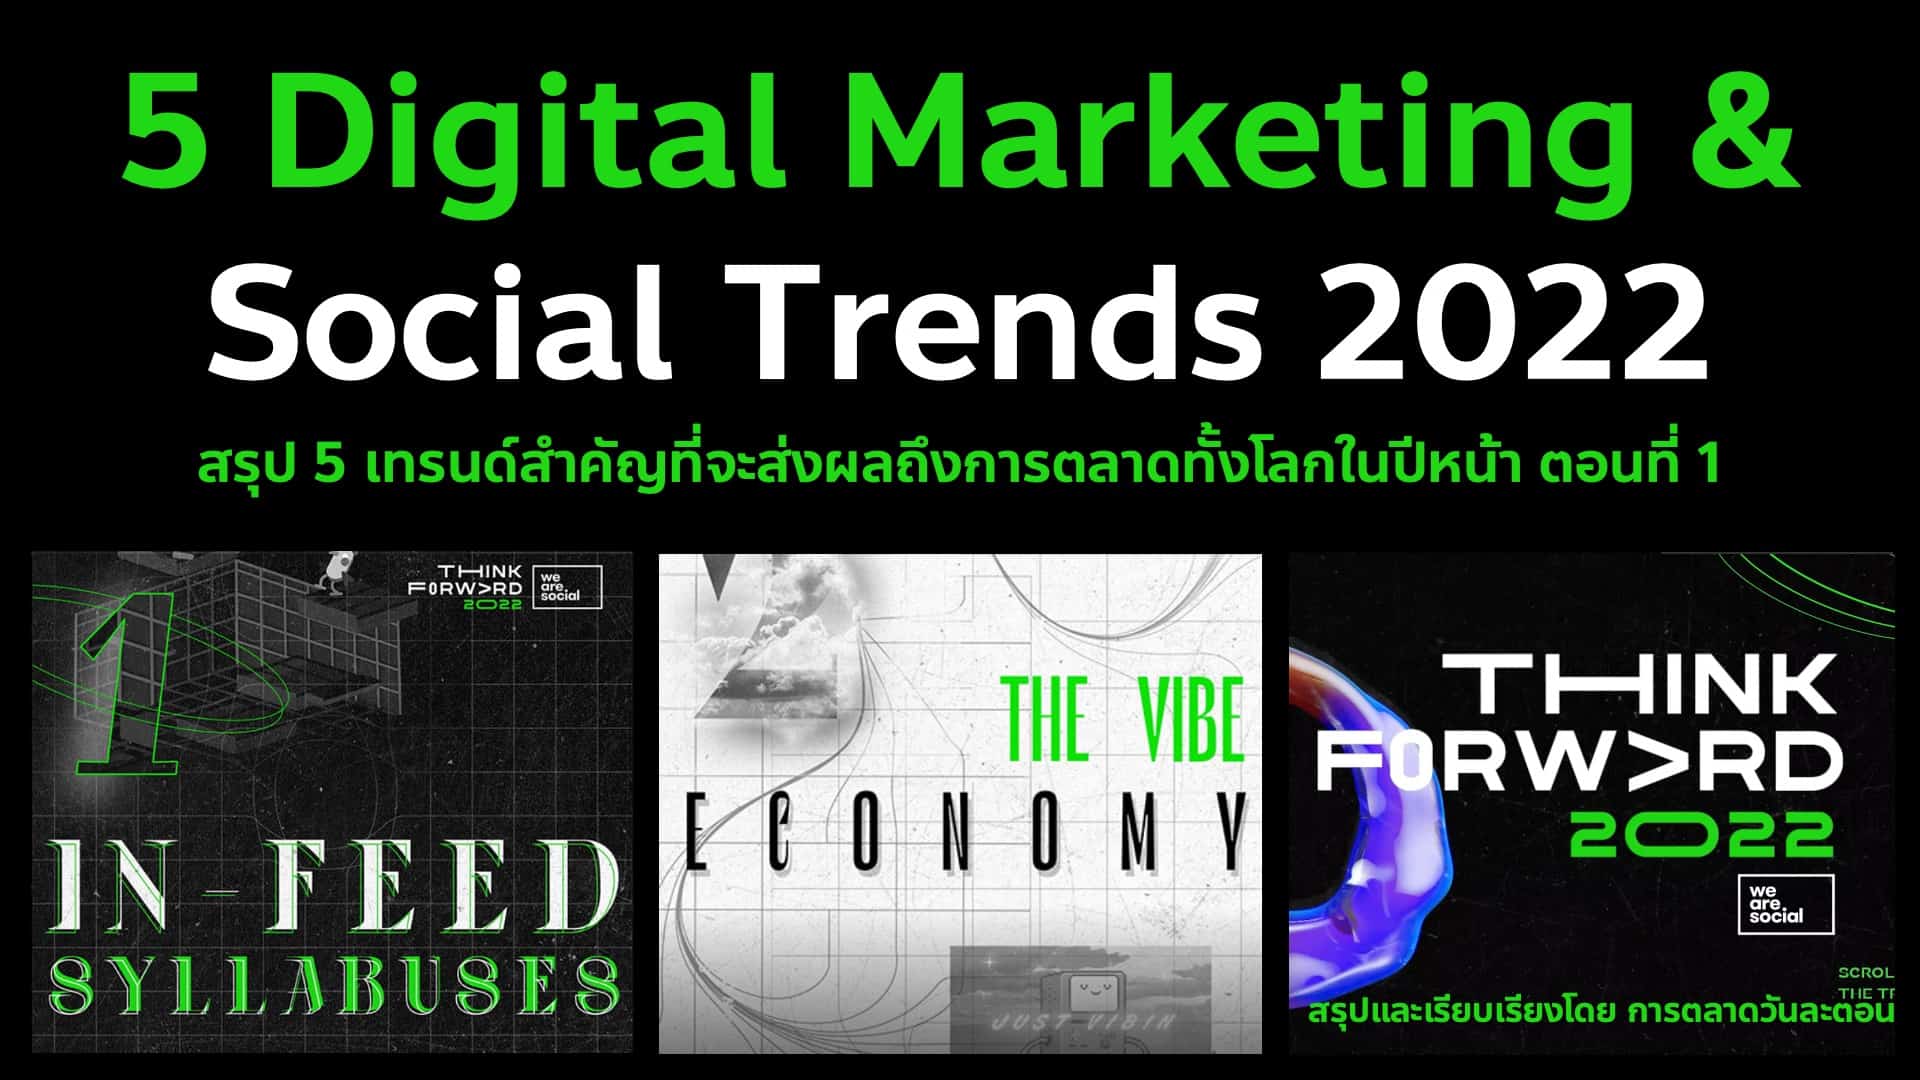 5 Digital Marketing & Social Trends 2022 เทรนด์การตลาดออนไลน์จาก We Are Social